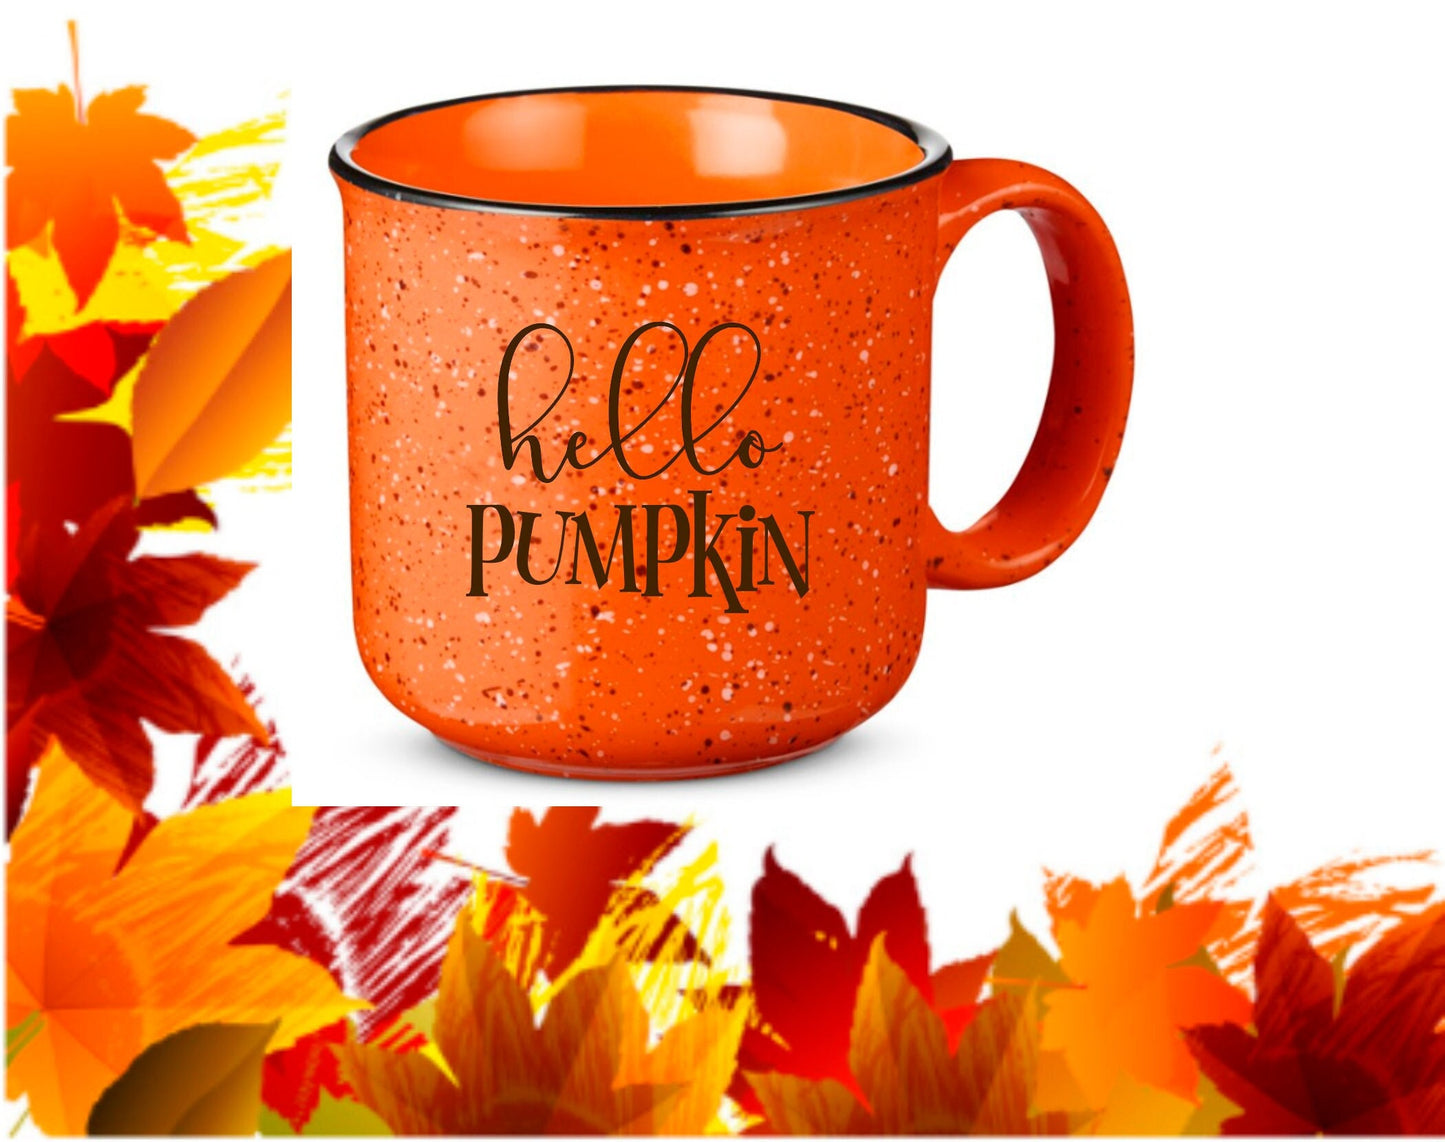 Good Morning Pumpkin Campfire Mug, Fall Mug, Fall Decor, 15 oz, Pumpkin Spice Latte, PSL Coffee Mug, Fall Home, Pumpkin Decor, Hello Pumpkin